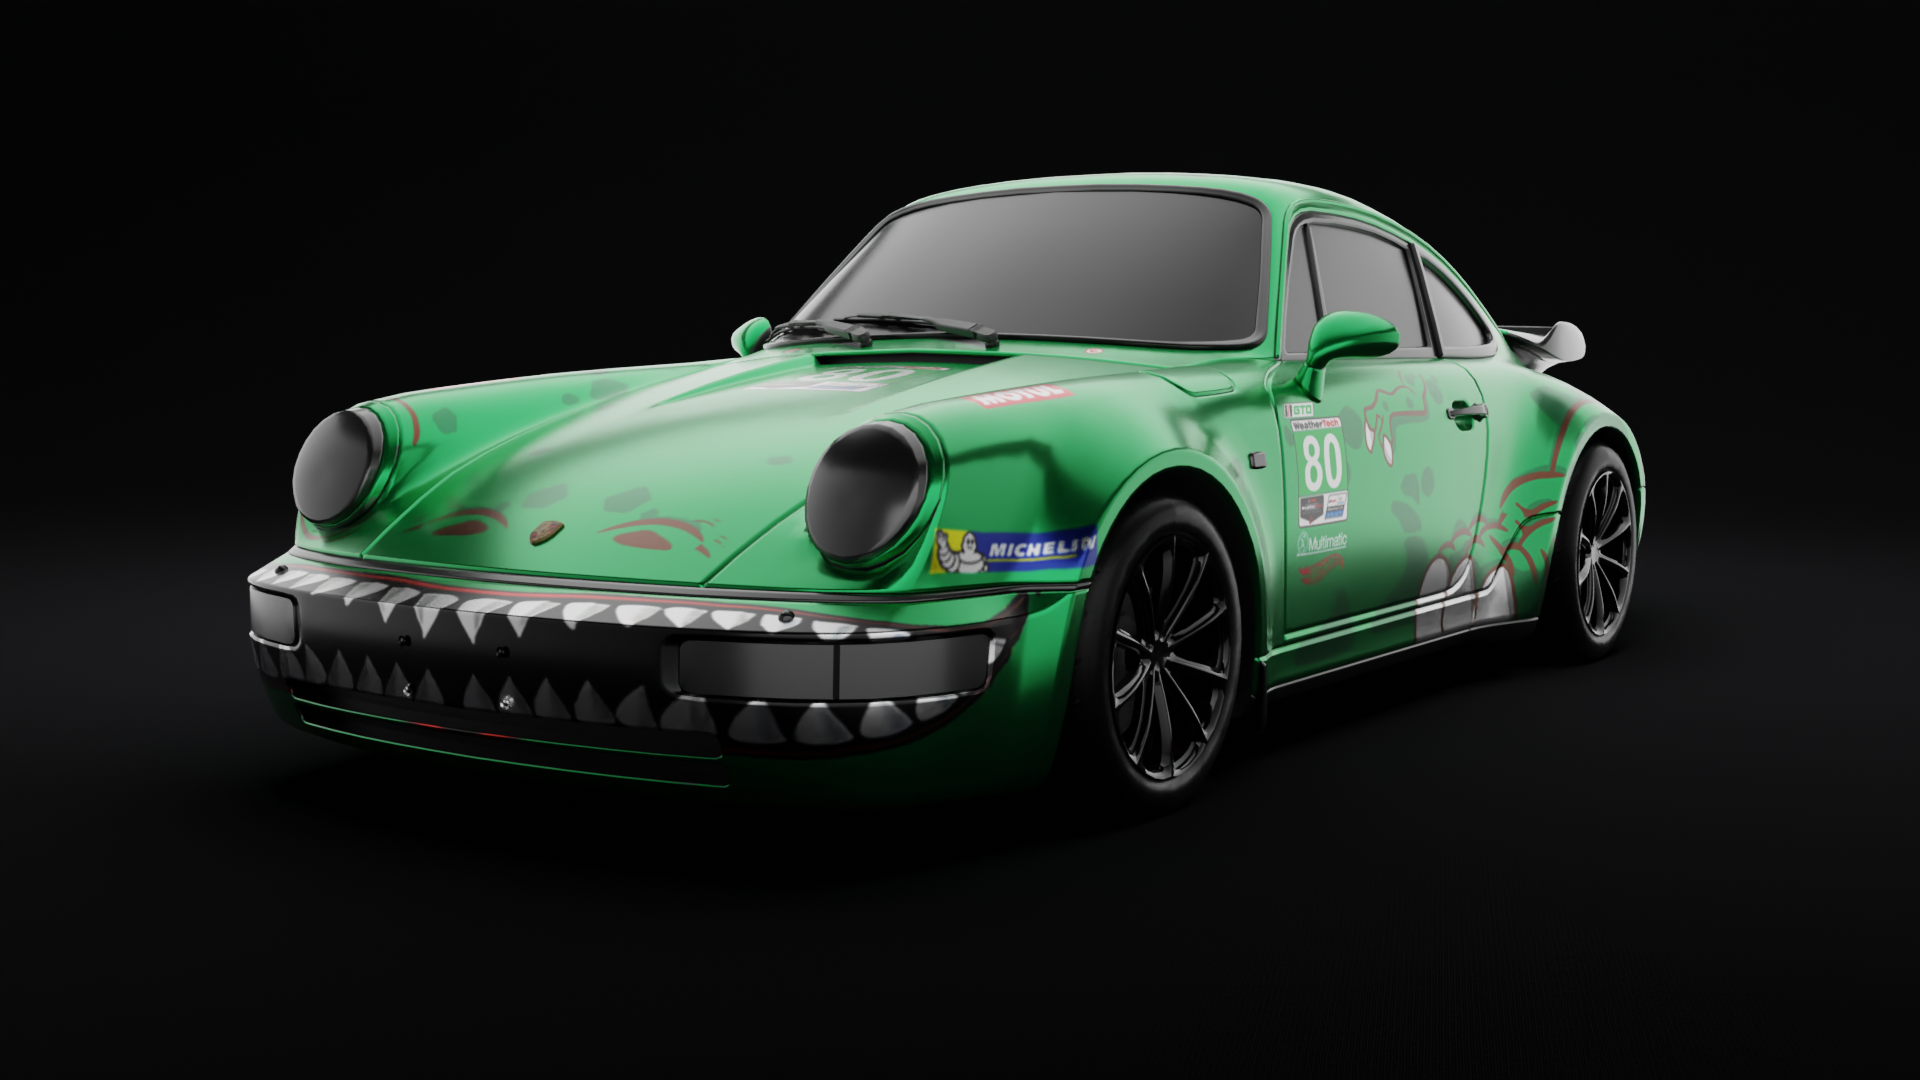 Porsche Livery – Rexy version